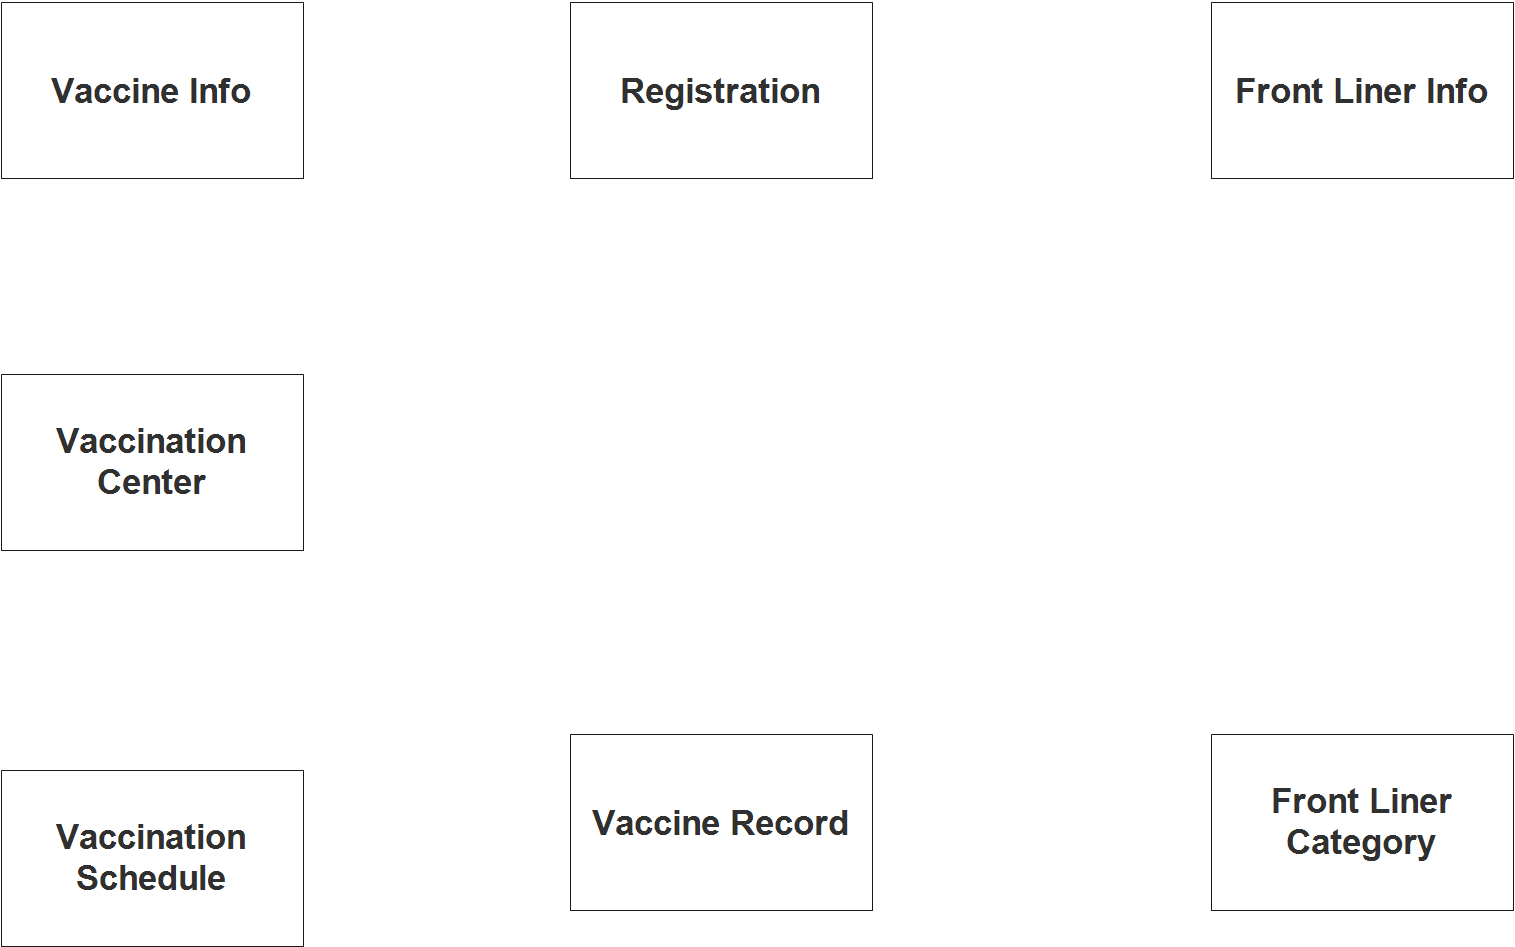 Vaccine Distribution System ER Diagram - Step 1 Identify Entities